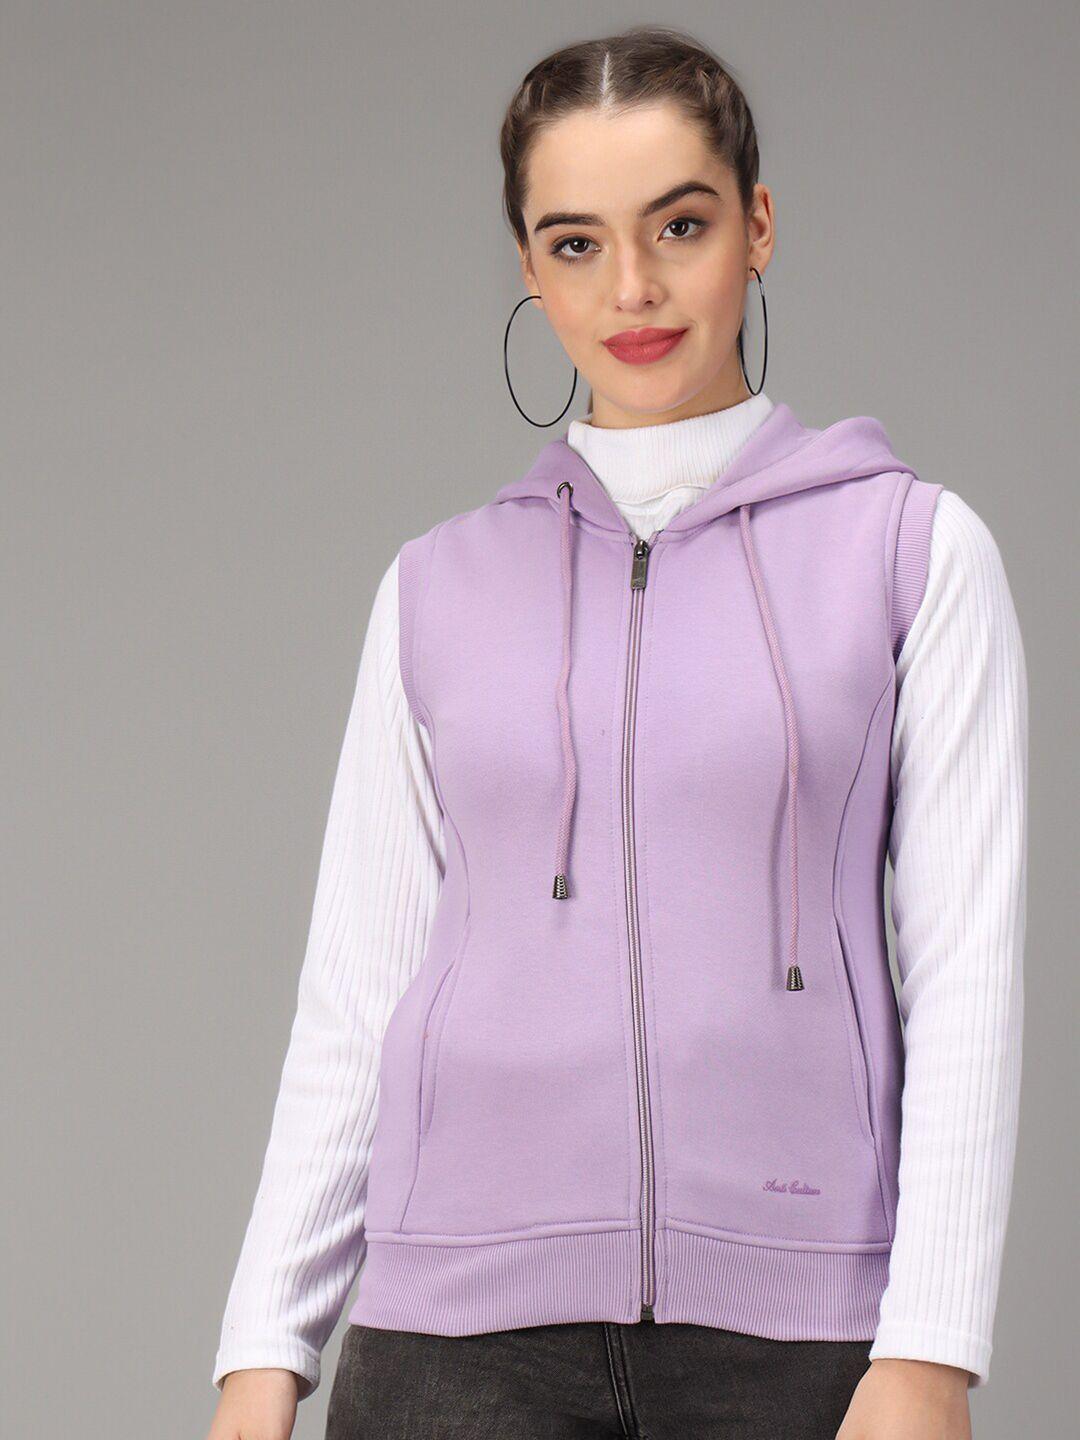 anti culture women lavender fleece sleeveless sweatshirt